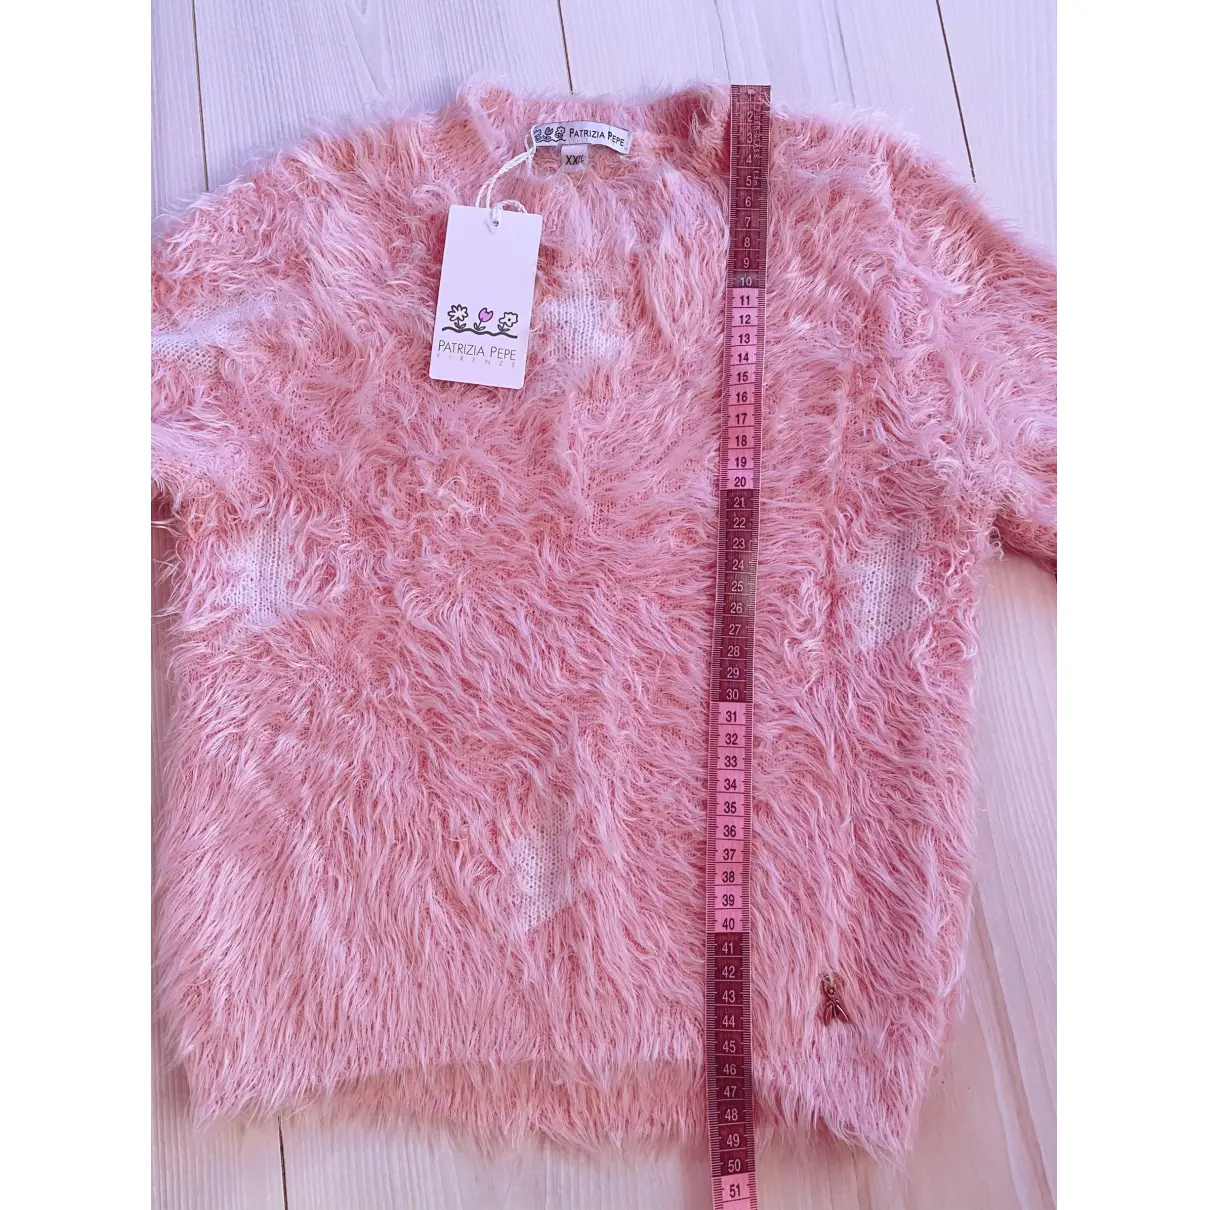 Buy Patrizia Pepe Sweater online